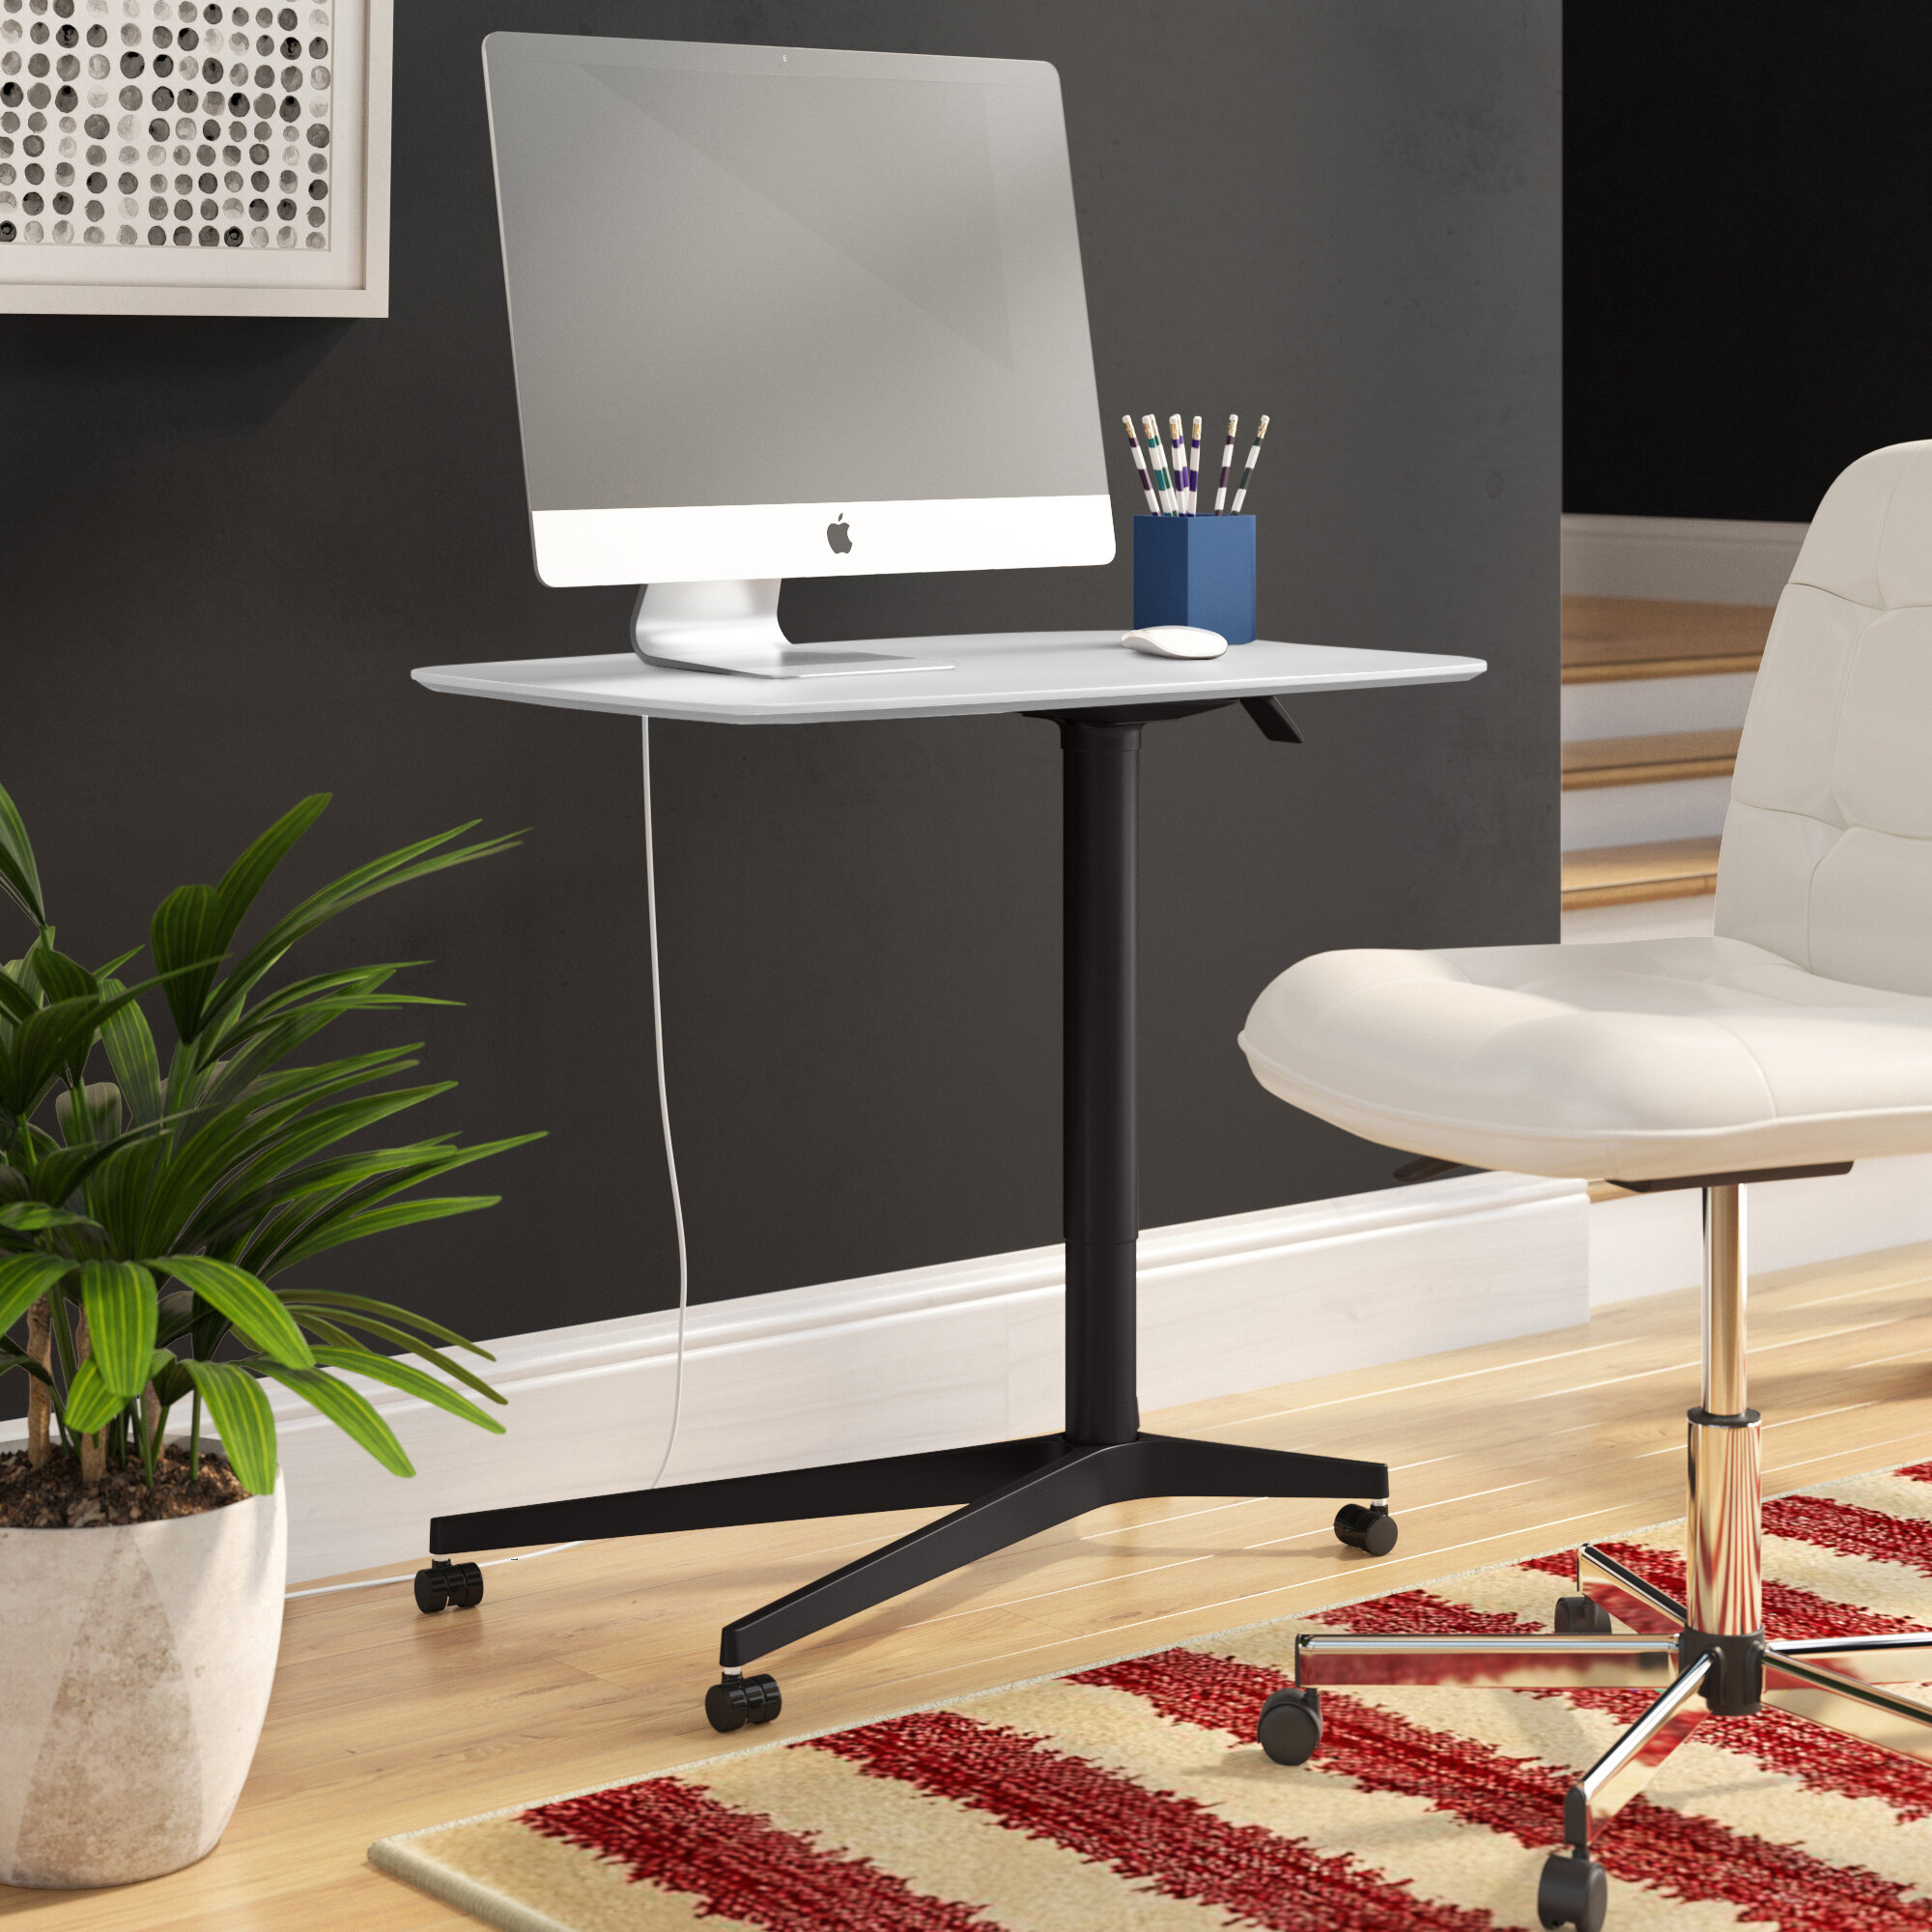 The Best Small Desks From Wayfair in 2022 - Buy Side from WSJ